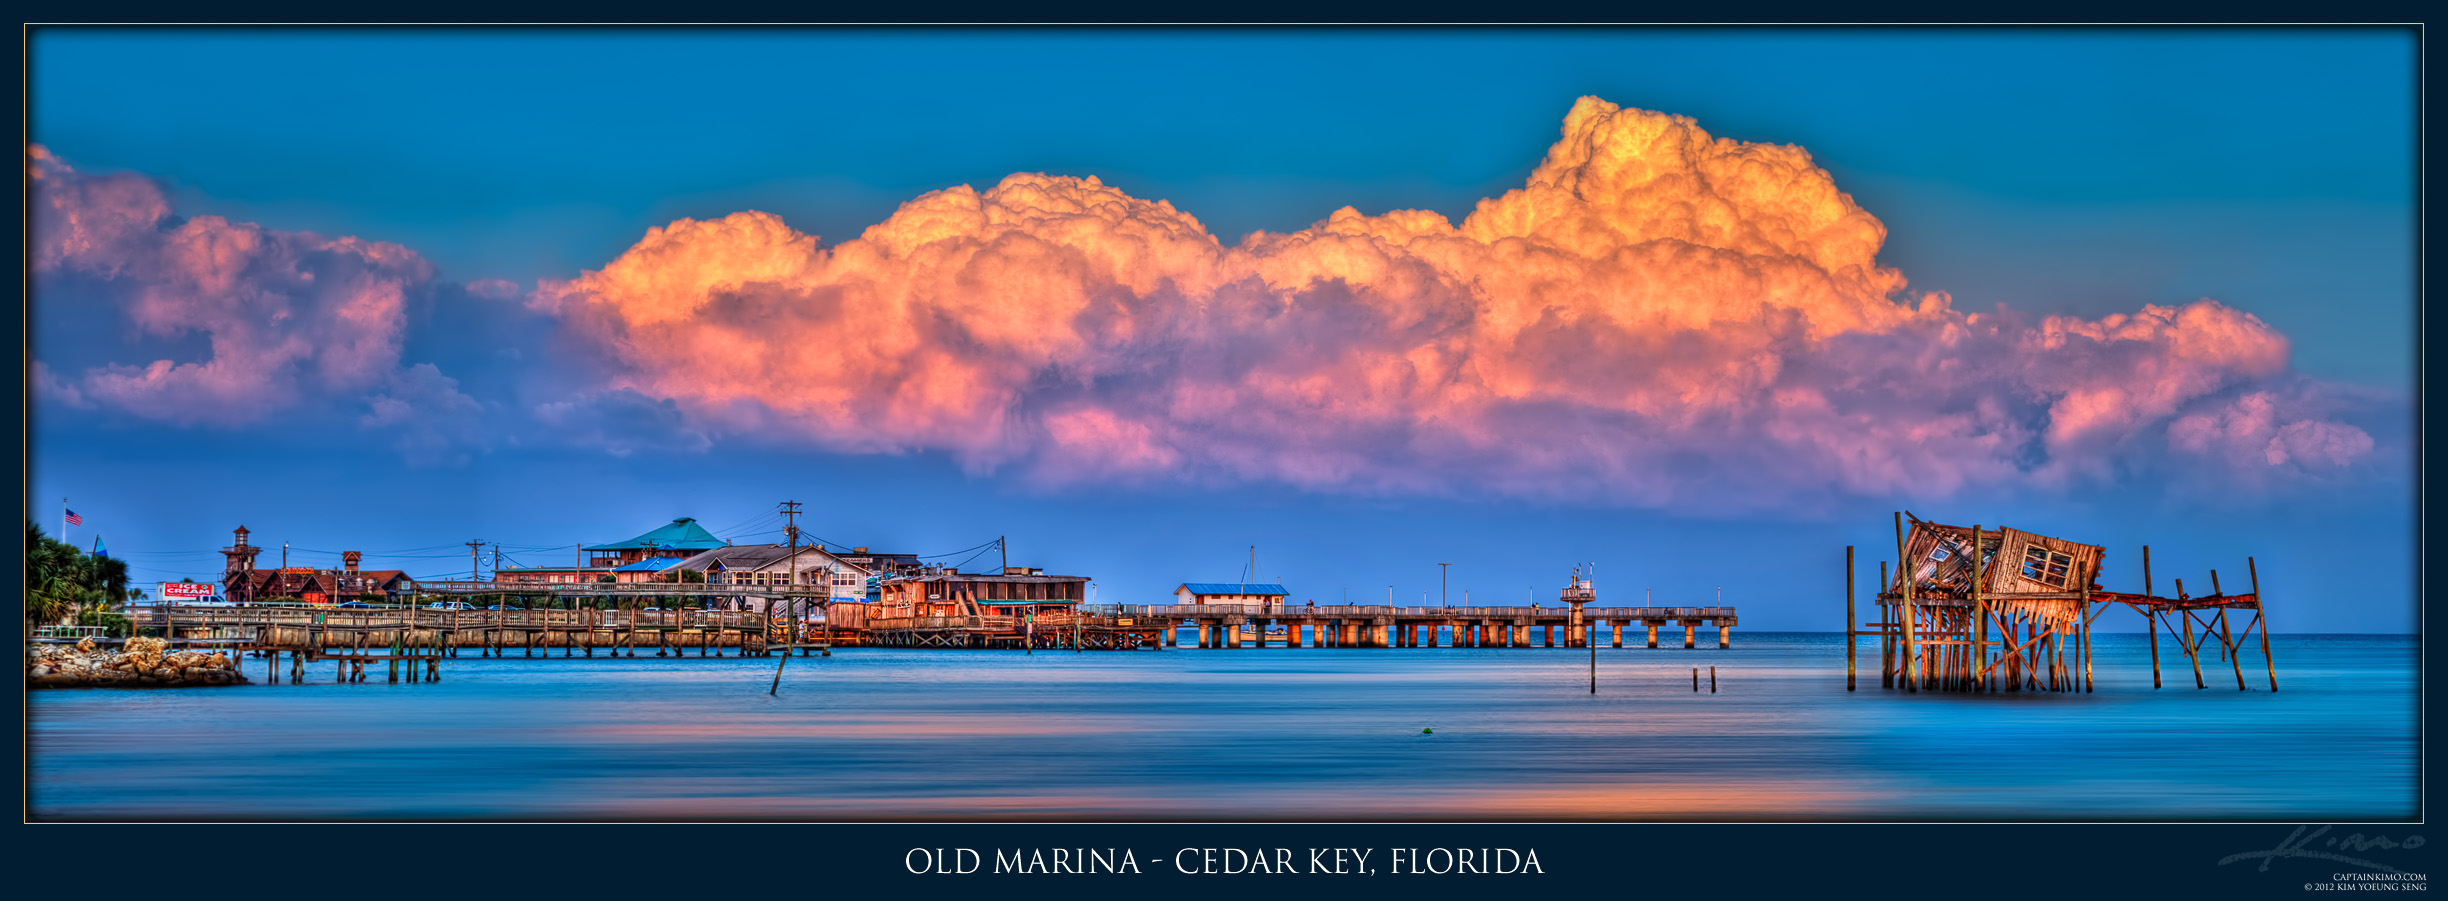 Old Marina from Cedar Key Florida During Sunset at Bayou